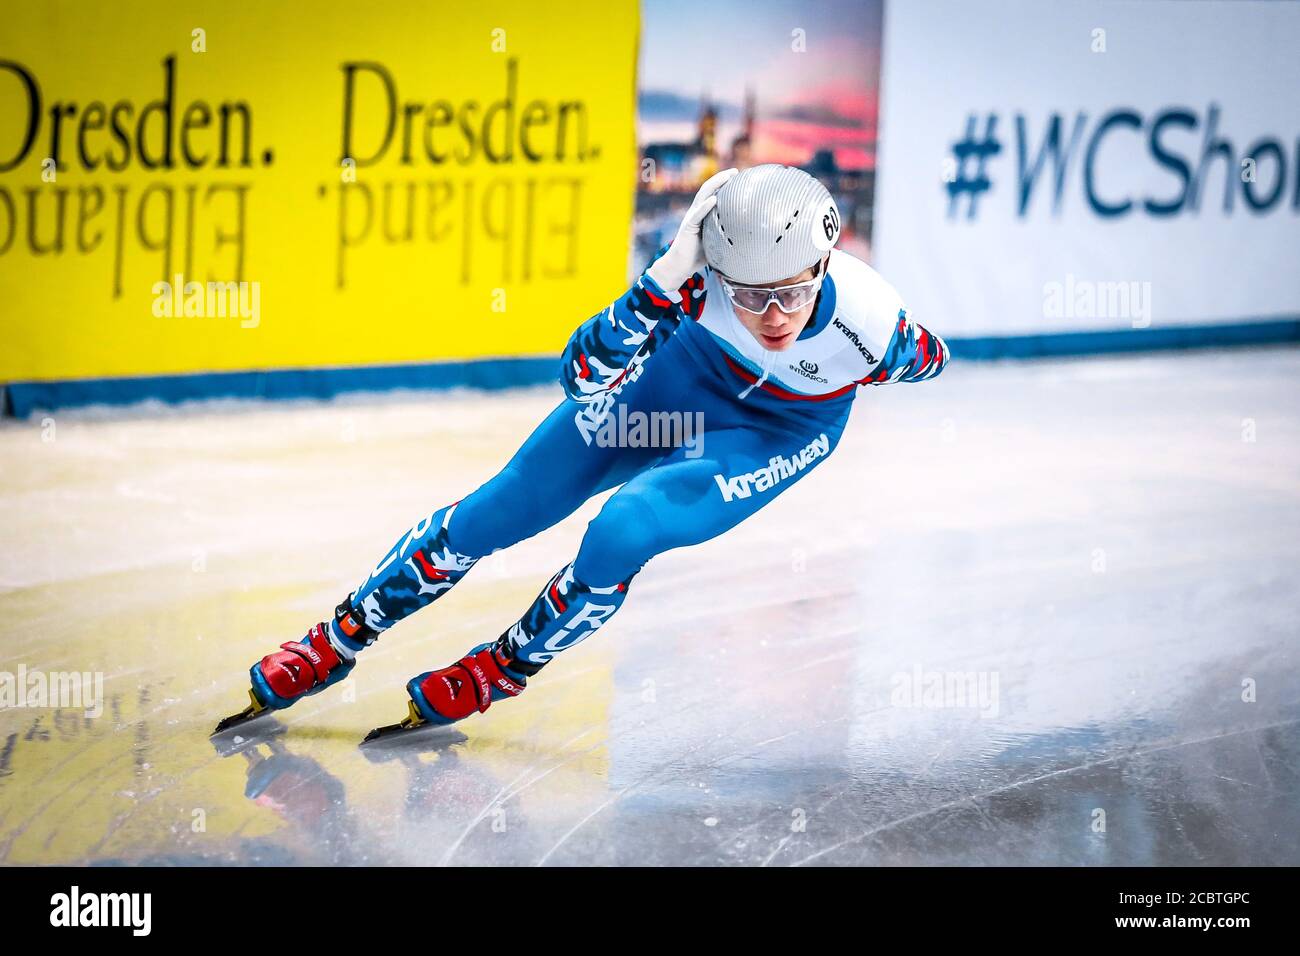 Dresden, Germany, February 01, 2019: Russian speed skater Alexander Shulginov competes during the ISU Short Track Speed Skating World Championship Stock Photo